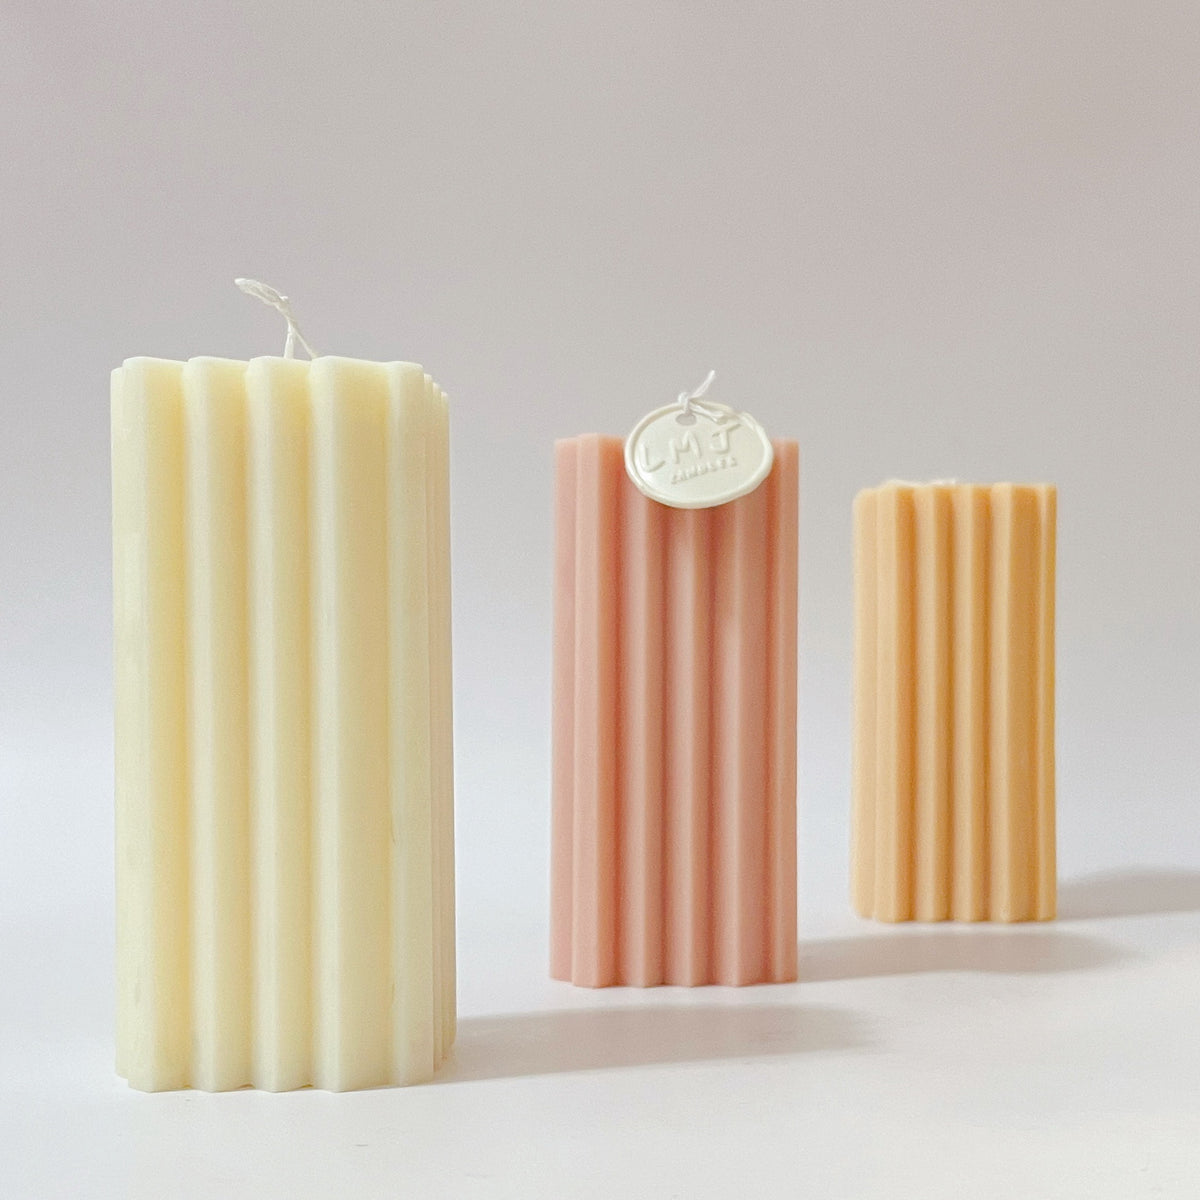 Geometric Square Pillar Candle - Minimalistic Home Décor | LMJ Candles